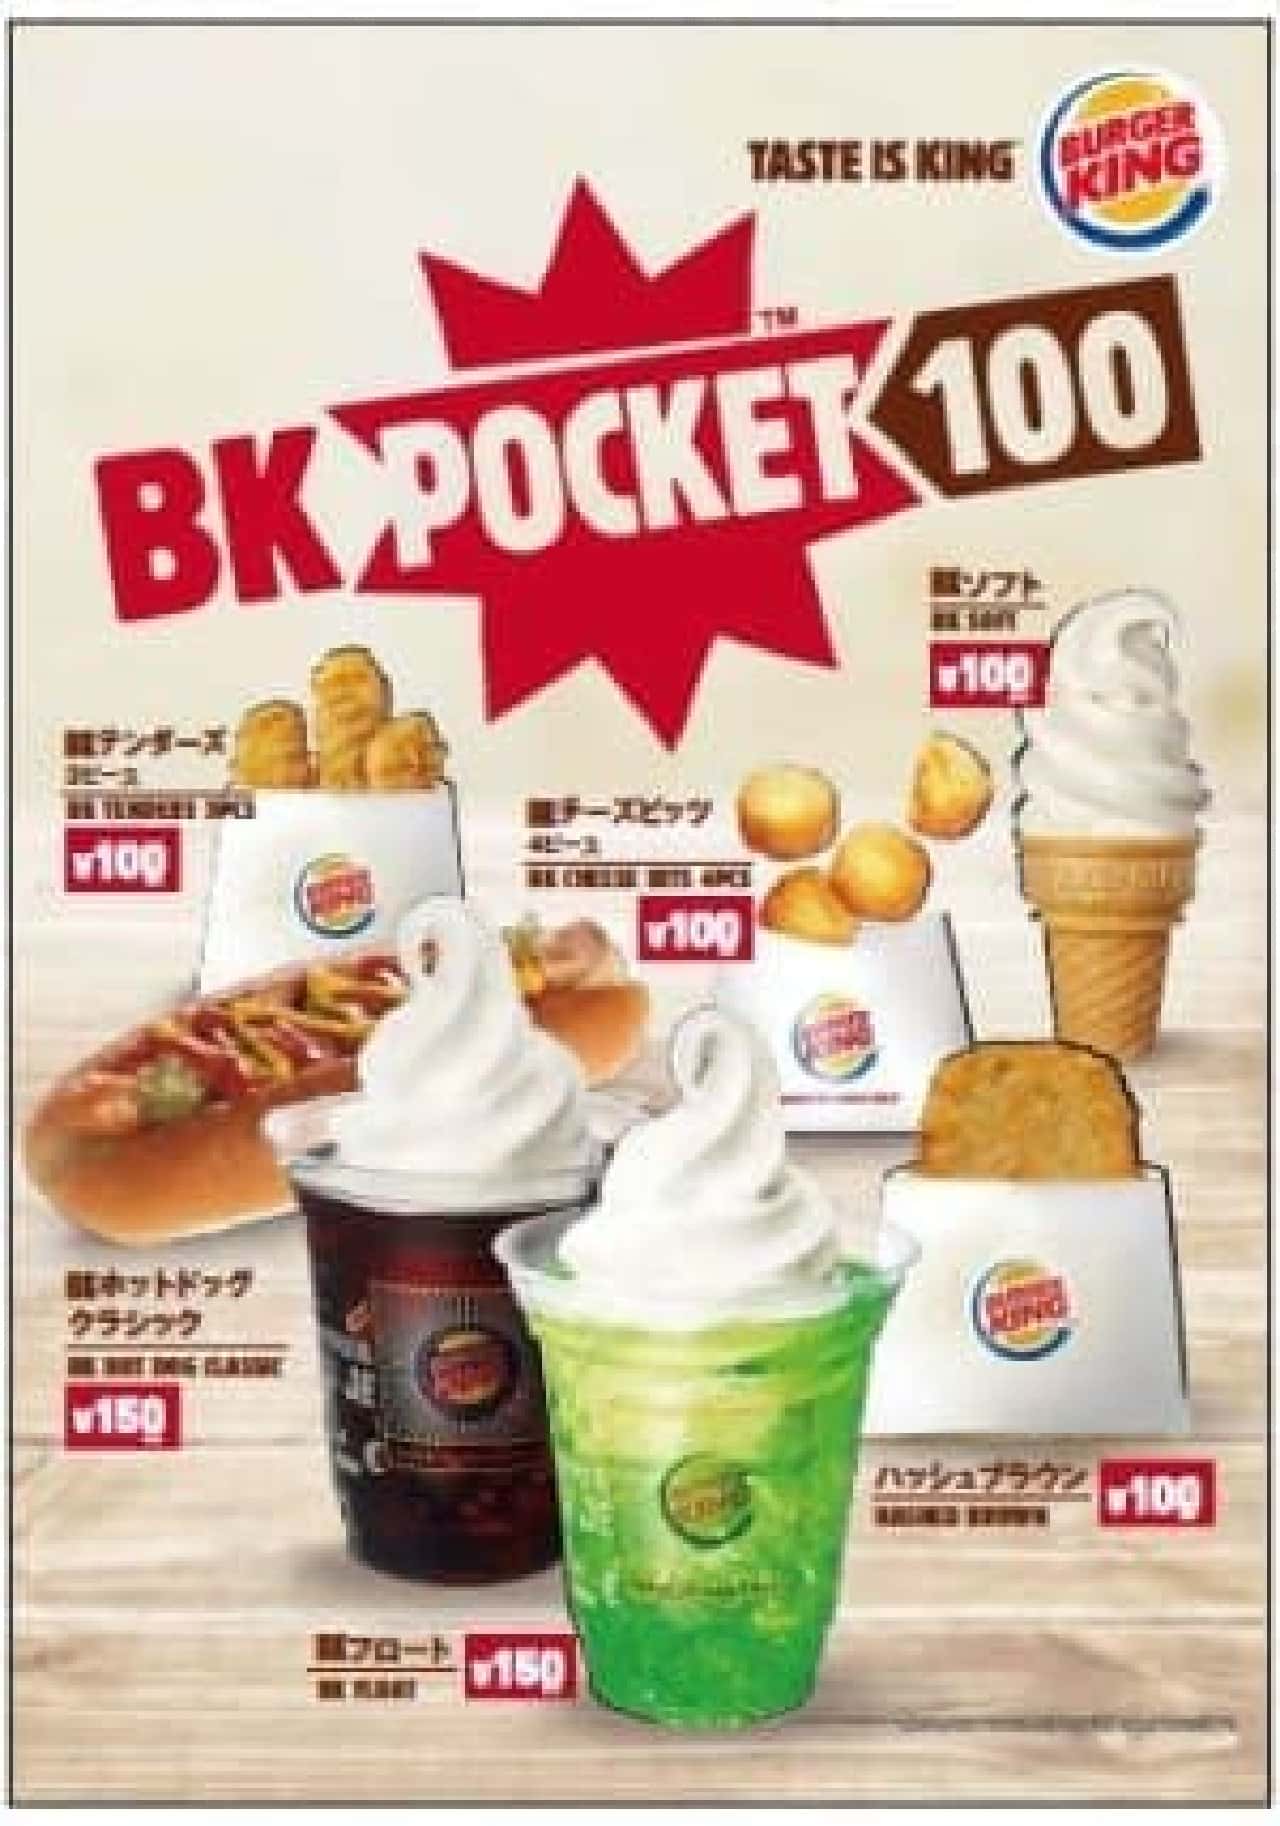 A full snack menu starts from 100 yen!